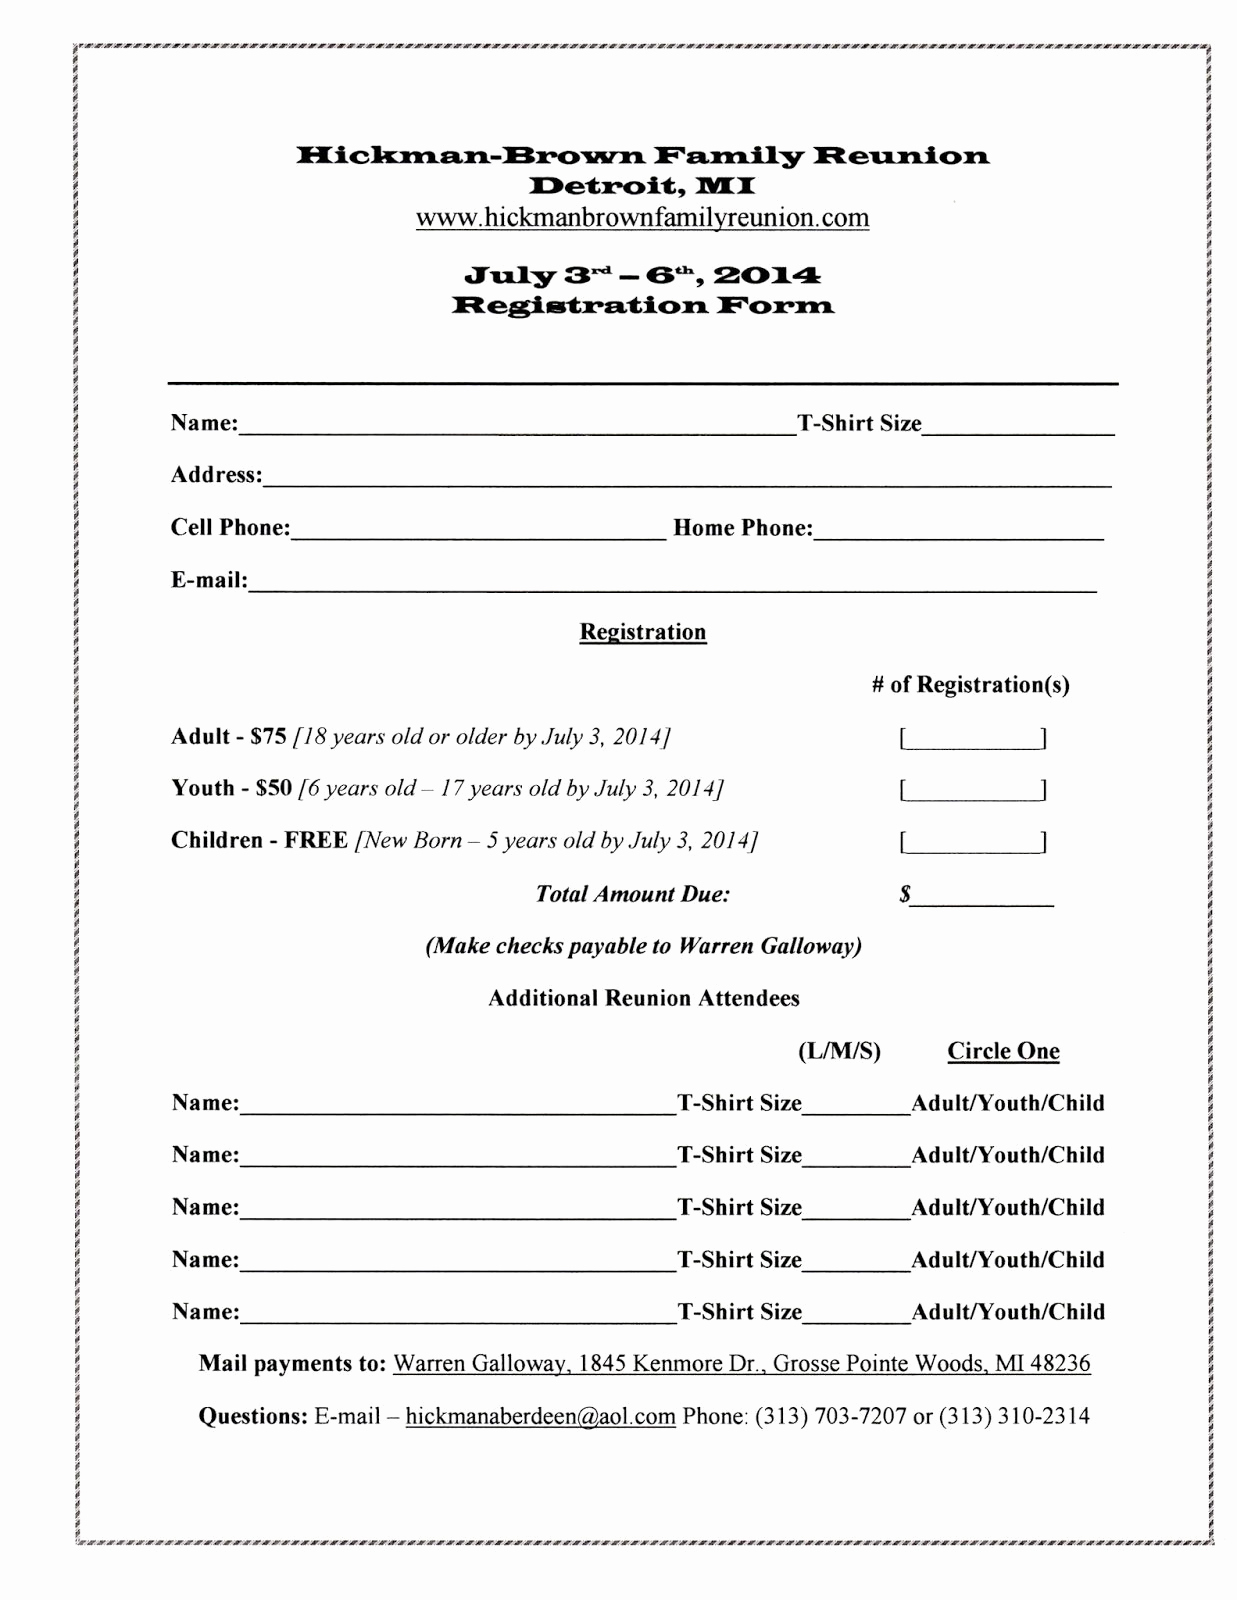 free registration form template elegant family reunion registration form template of free registration form template